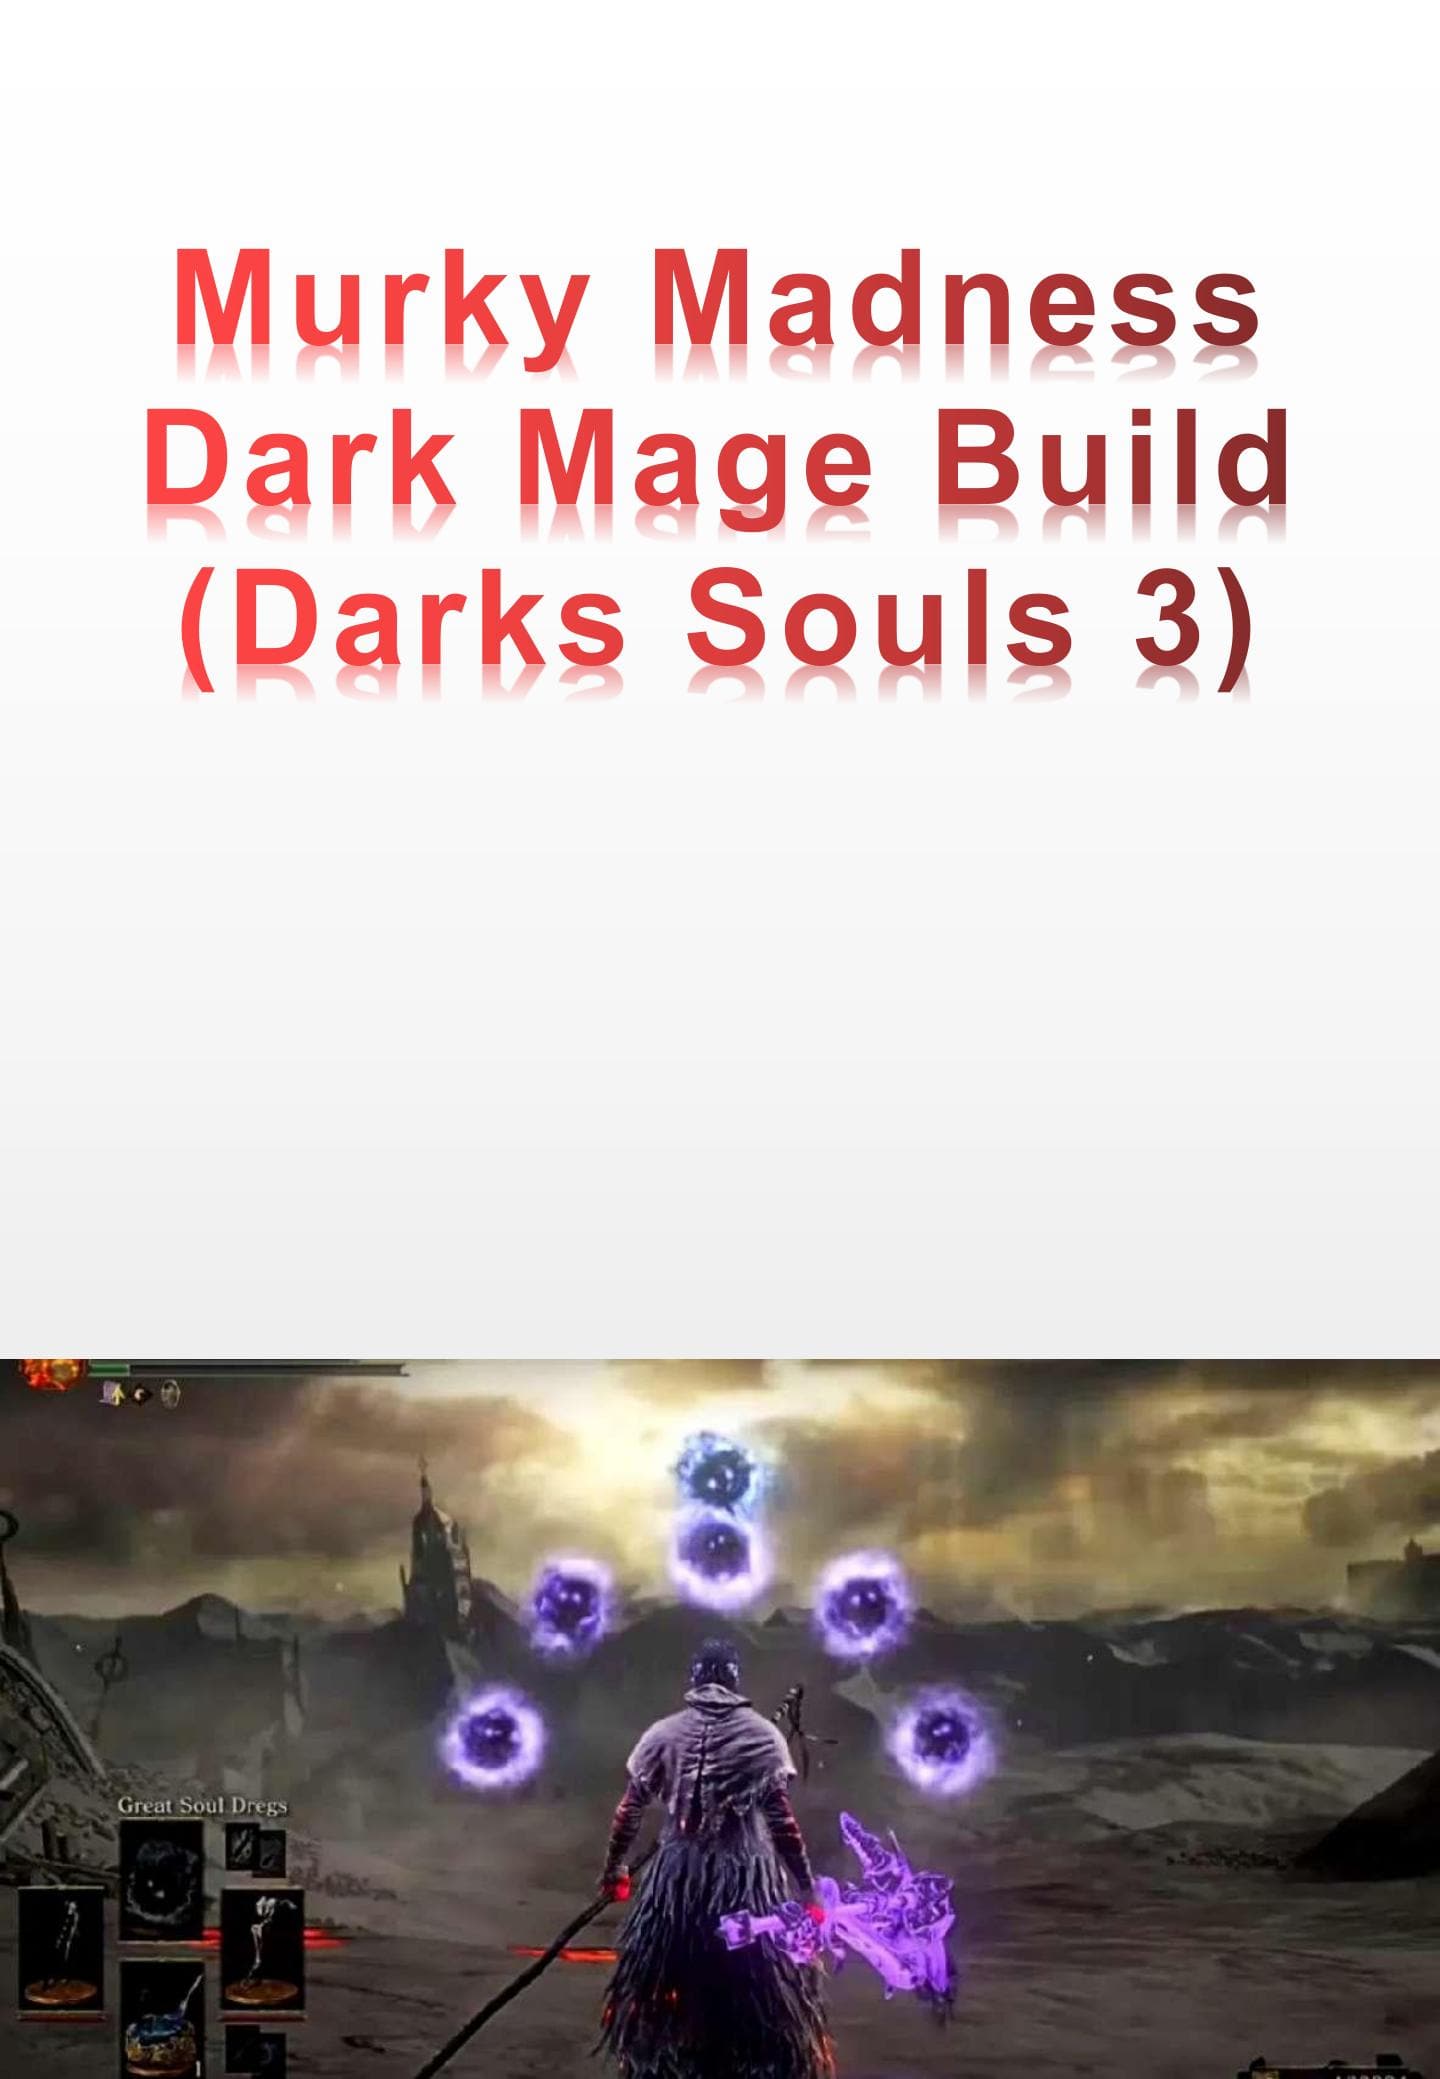 Murky Madness Dark Mage Build - (Darks Souls 3)